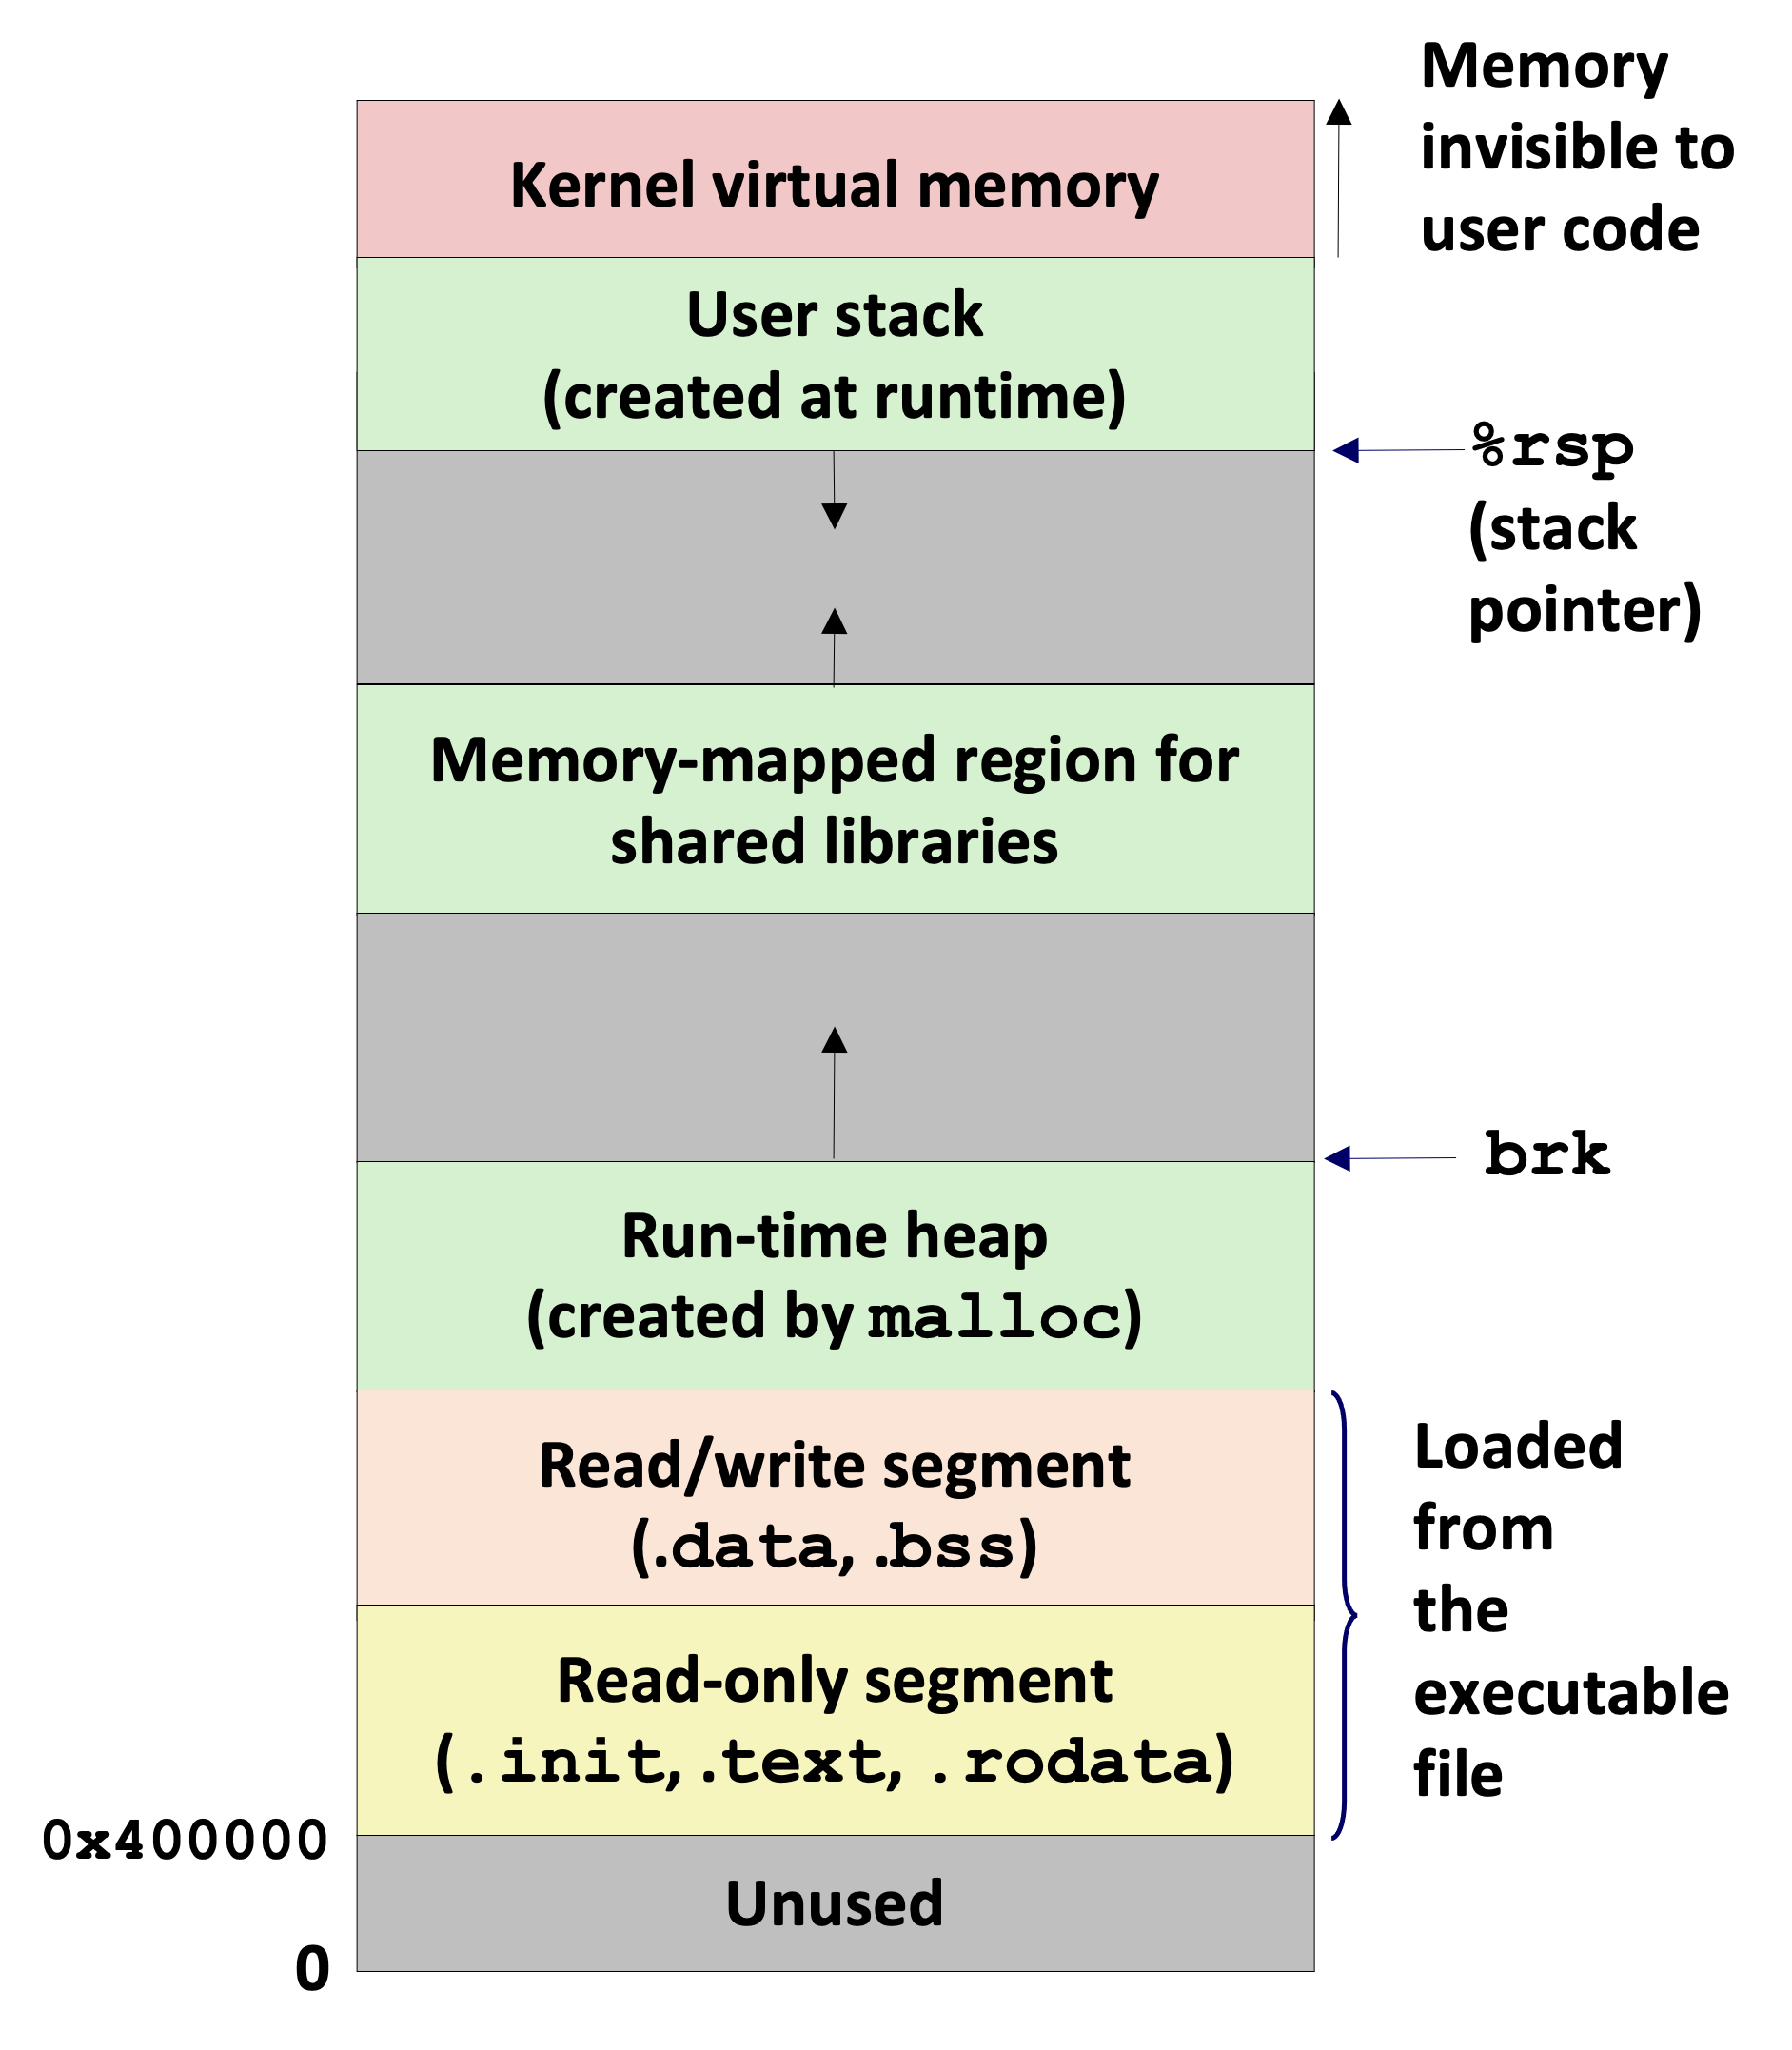 Virtual Memory Layout